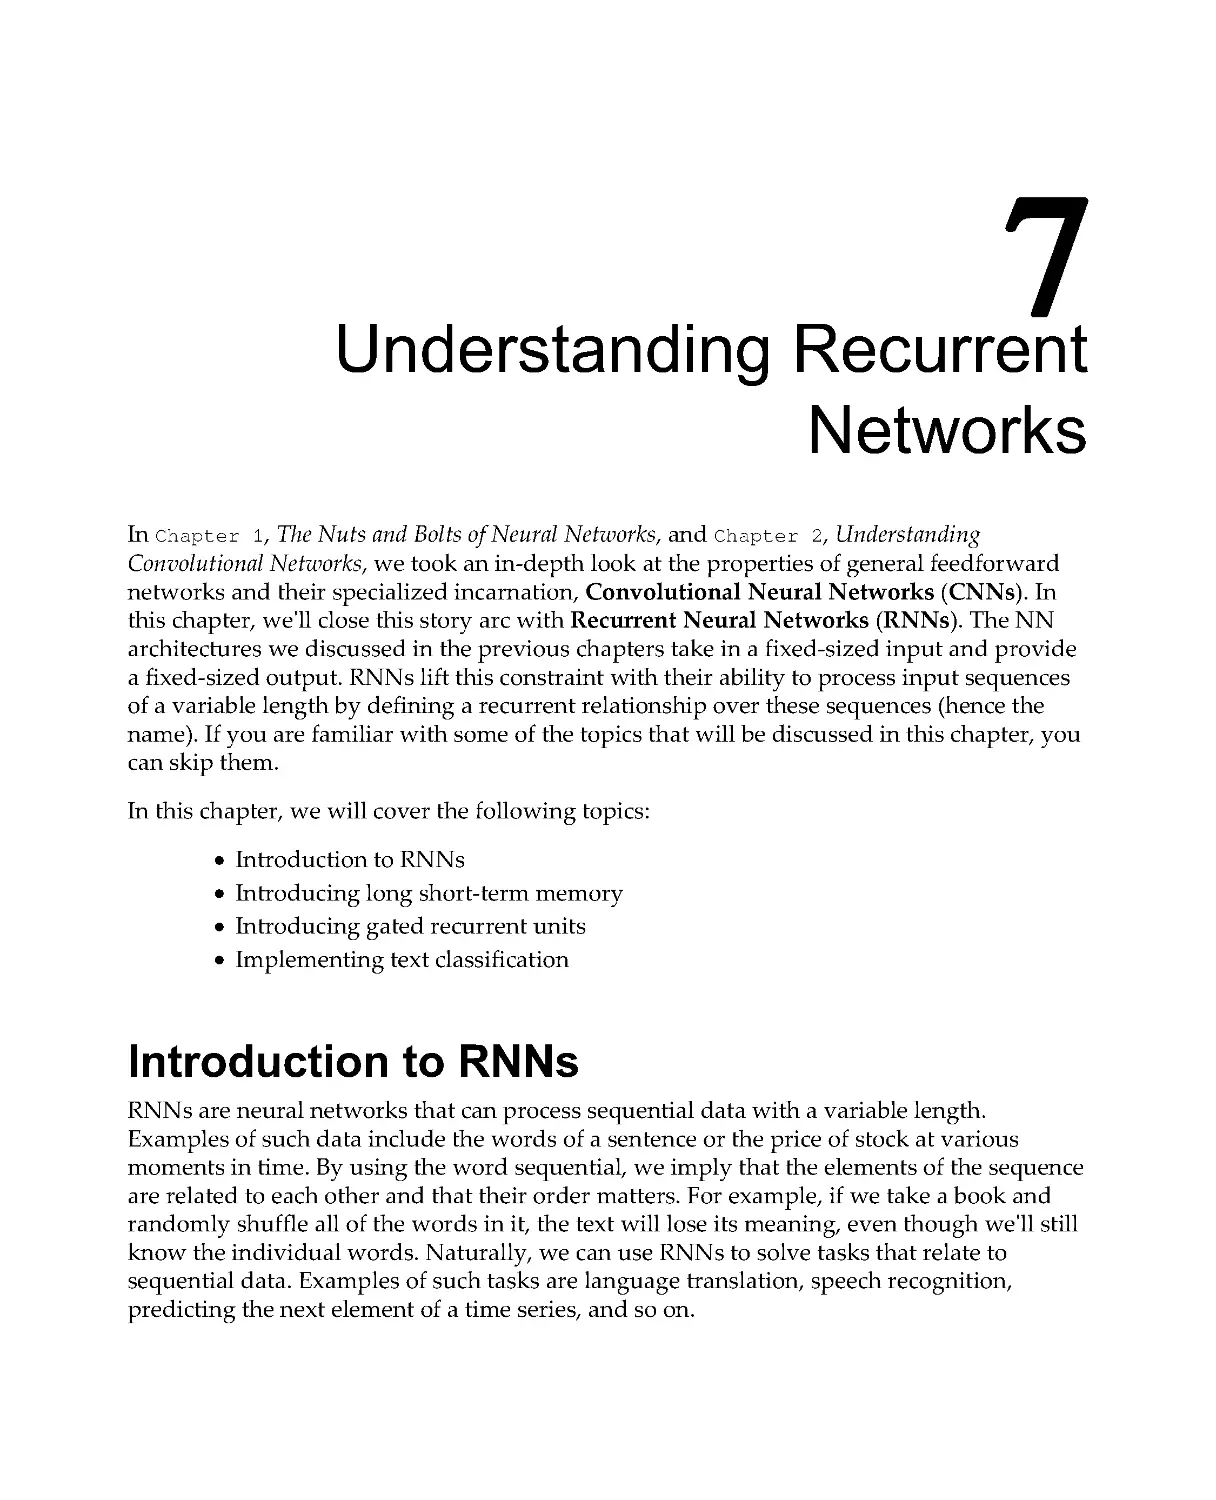 Chapter 7: Understanding Recurrent Networks